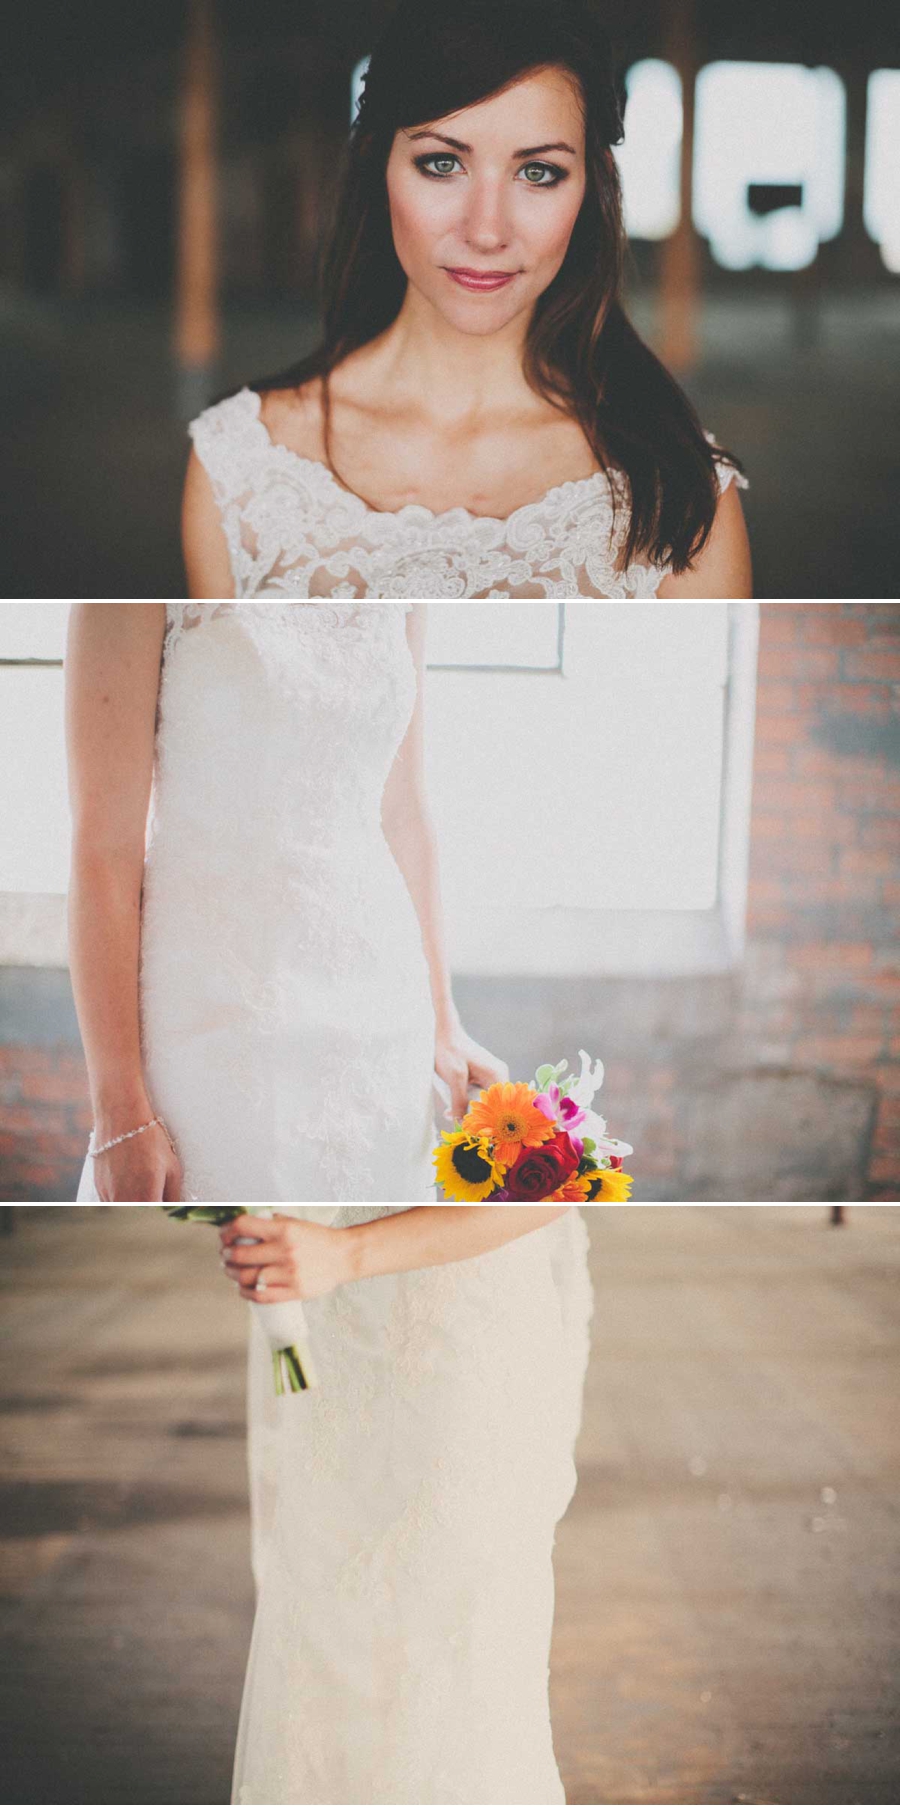 Fucking gorgeous wedding dress